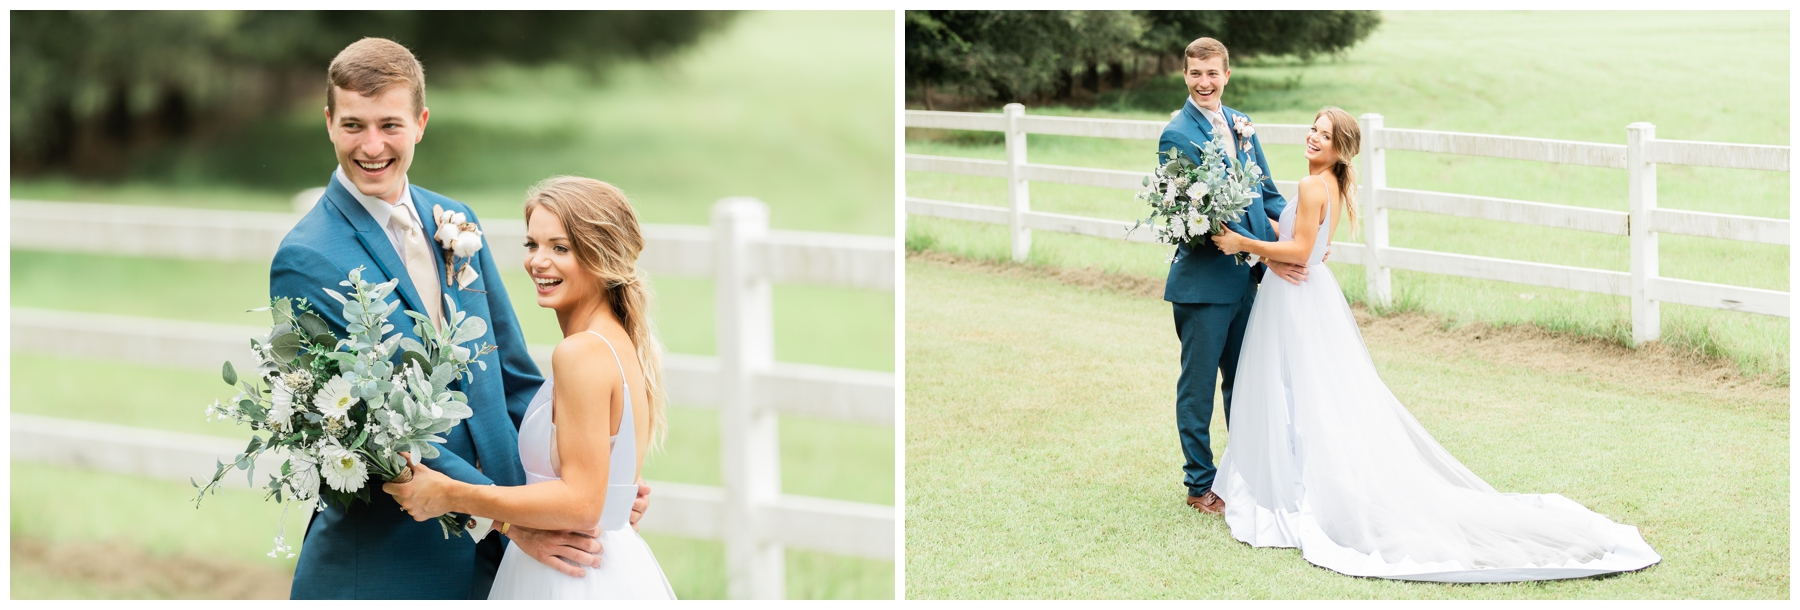 Atlanta_Georgia_Wedding_Photographer_Outdoor Wedding_Rustic_Bride and Groom